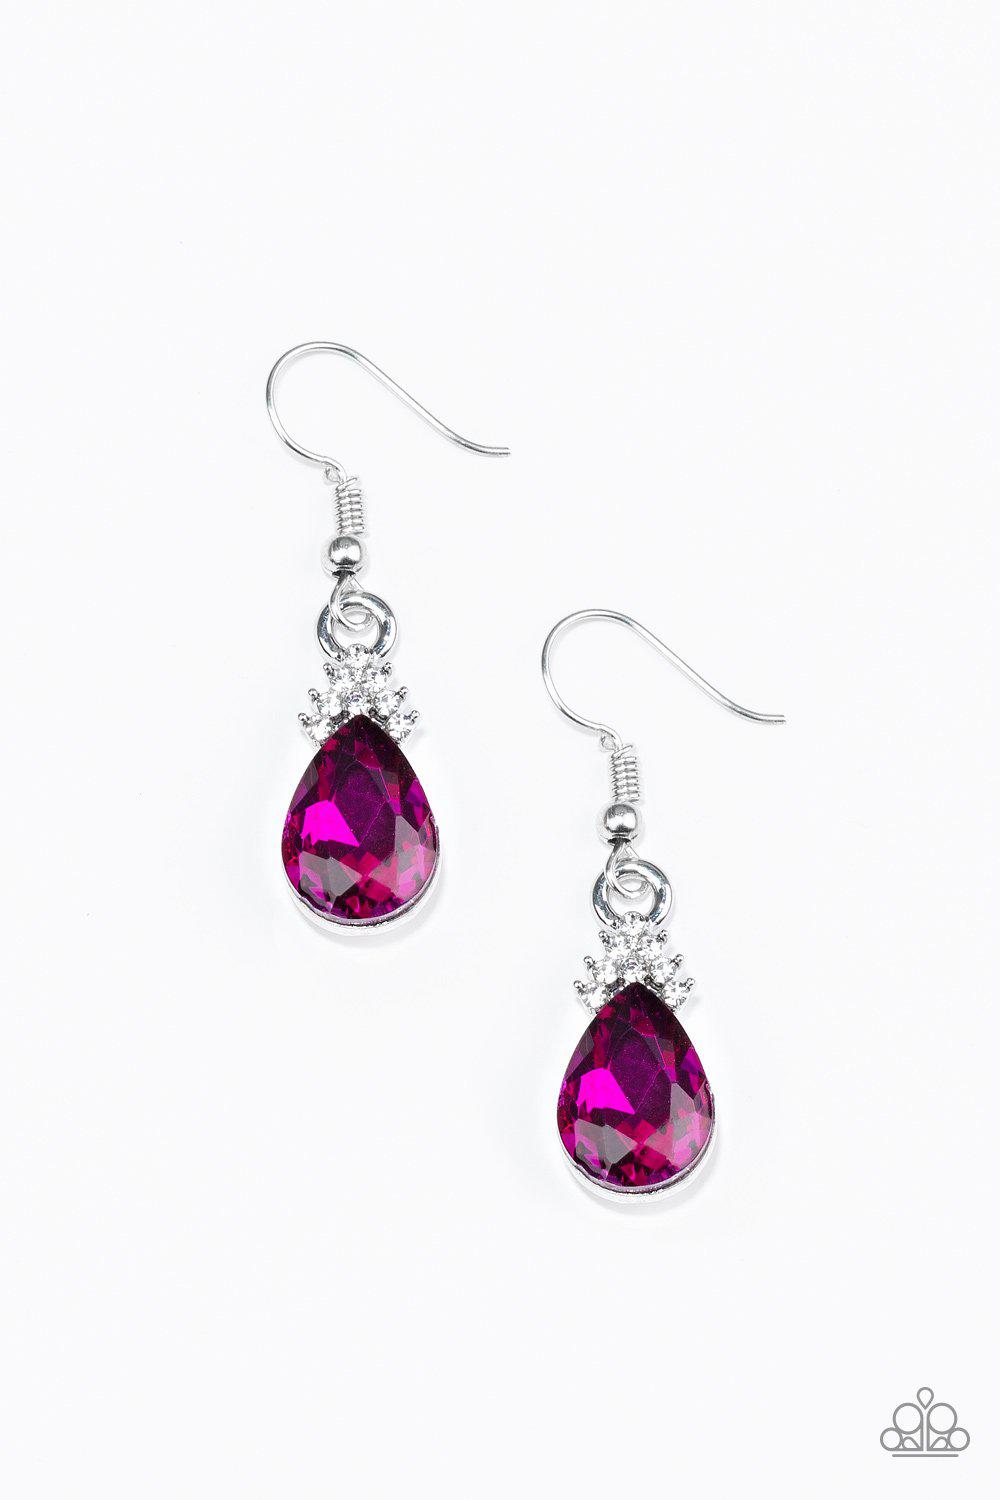 5th Avenue Fireworks Pink Rhinestone Earrings - Paparazzi Accessories - lightbox -CarasShop.com - $5 Jewelry by Cara Jewels